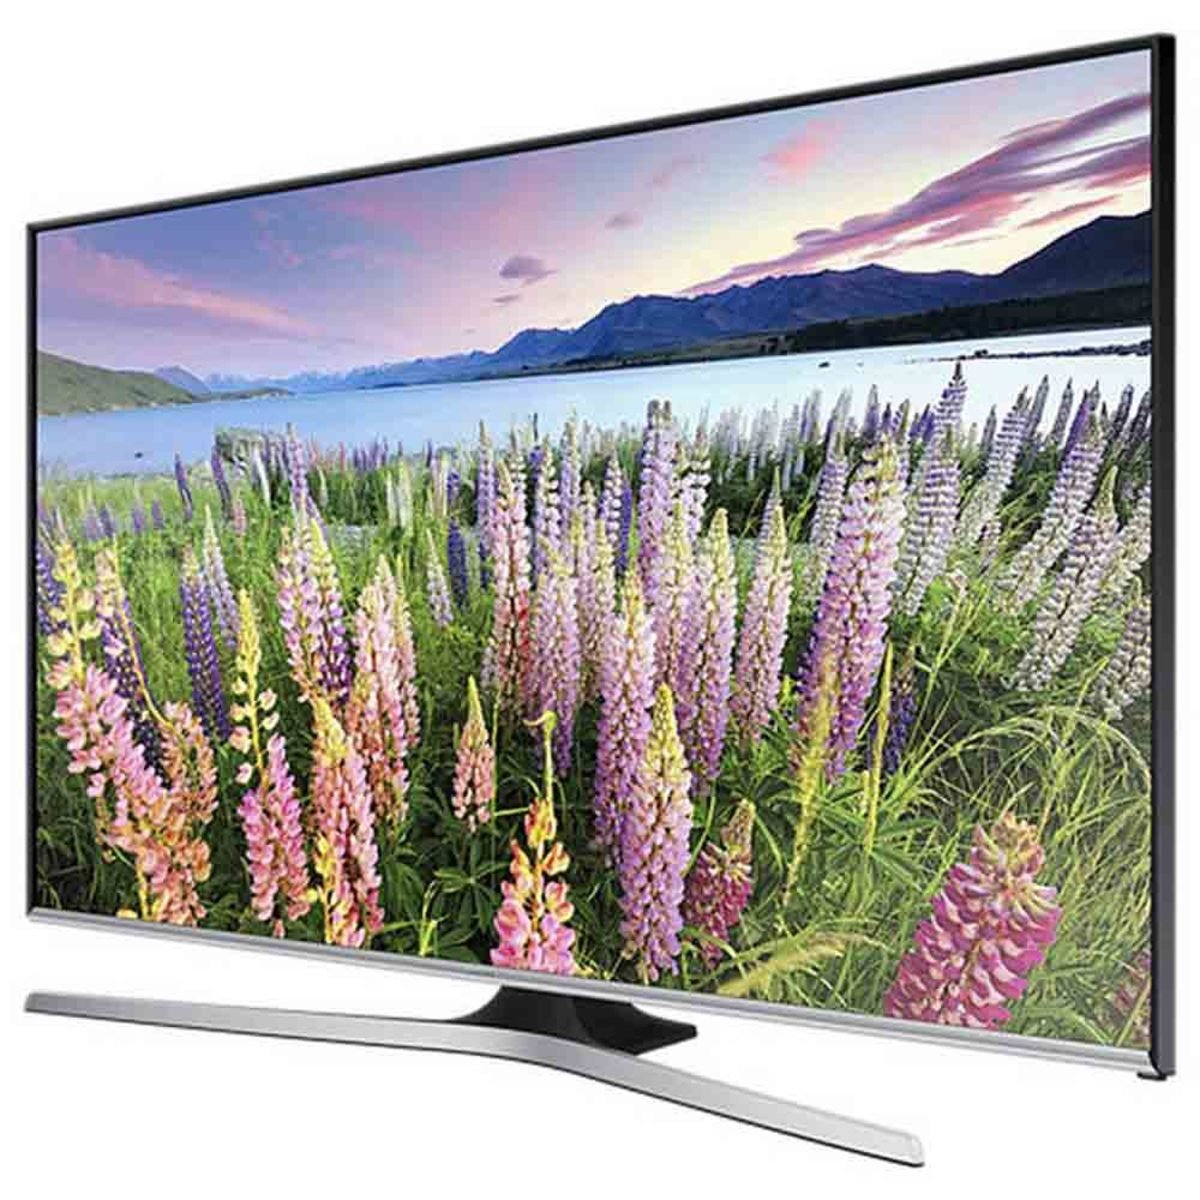 Samsung Smart LED TV UA50J5500AR 50inch